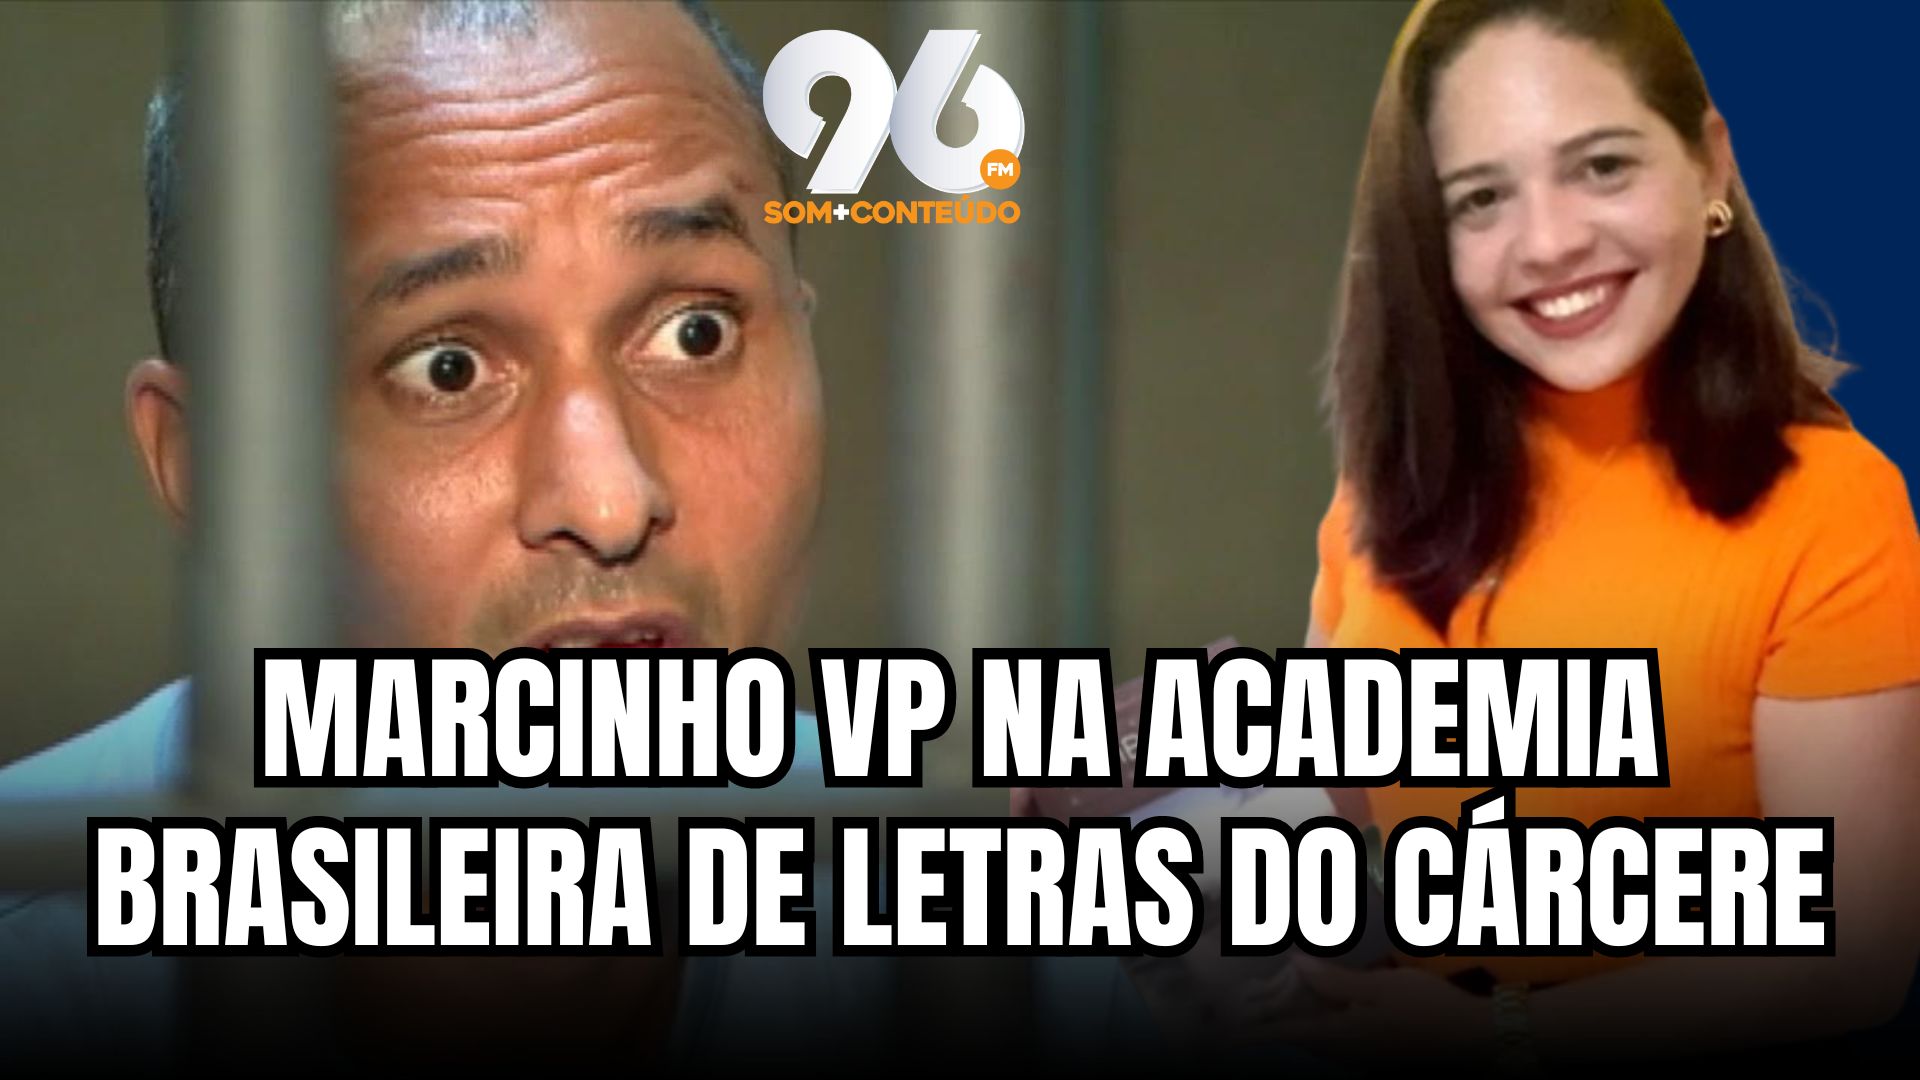 [VIDEO] Além de Marcinho VP, Potiguar vai integrar Academia Brasileira de Letras do Cércere